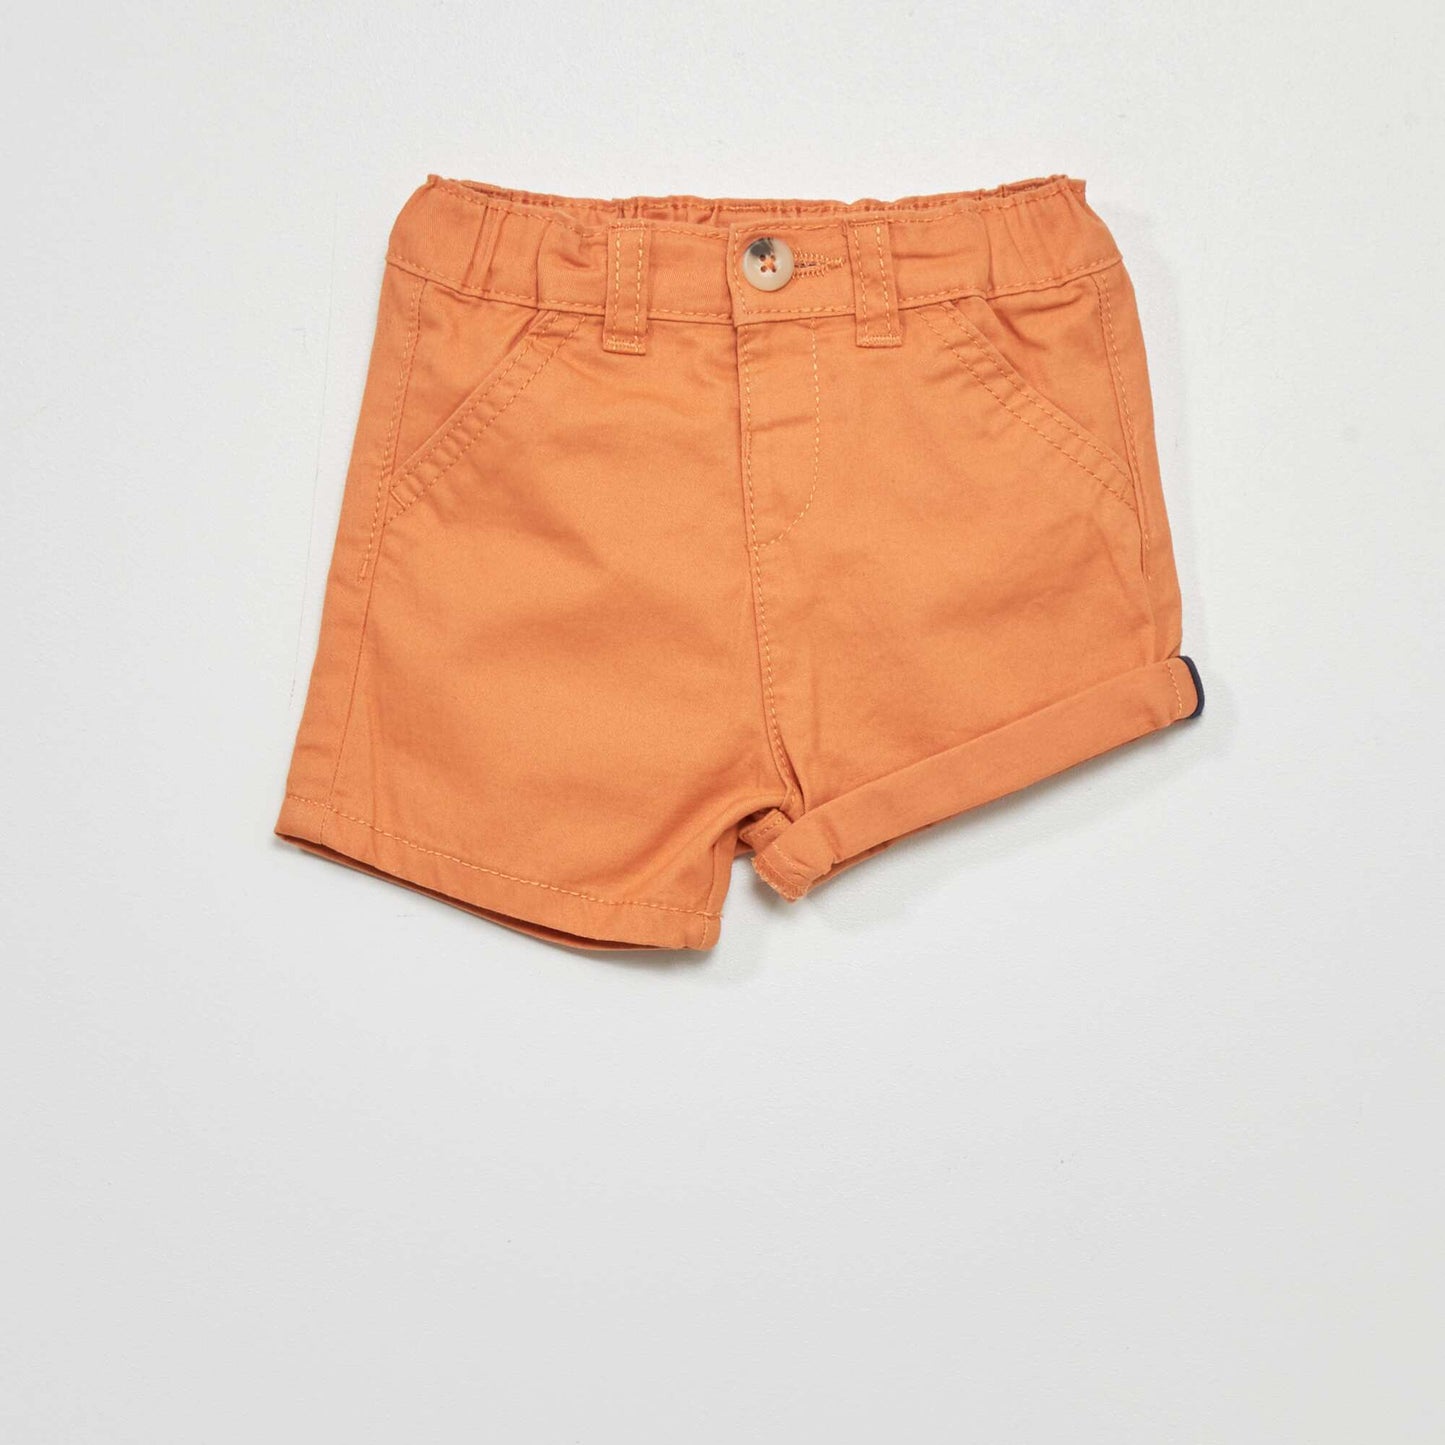 Twill shorts with adjustable waist rust orange